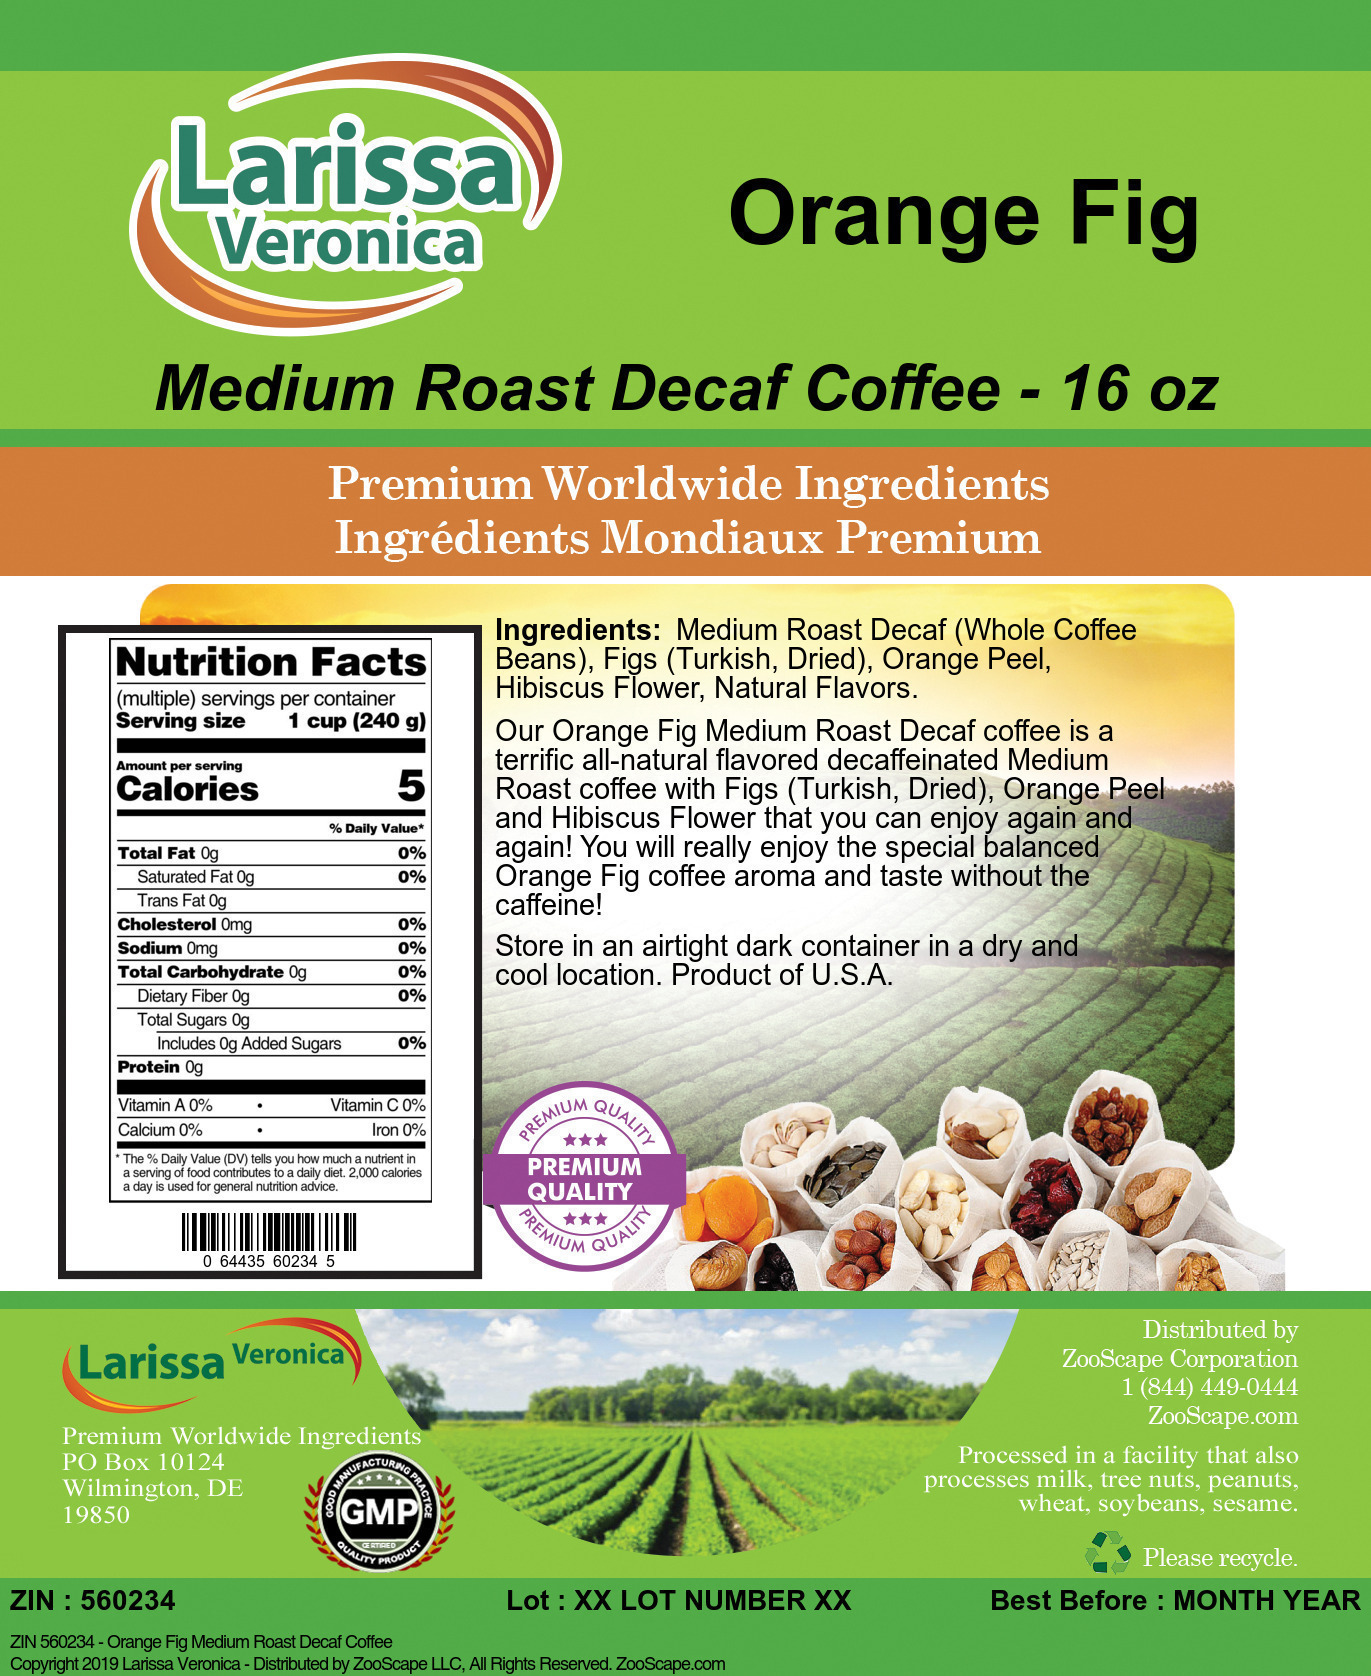 Orange Fig Medium Roast Decaf Coffee - Label